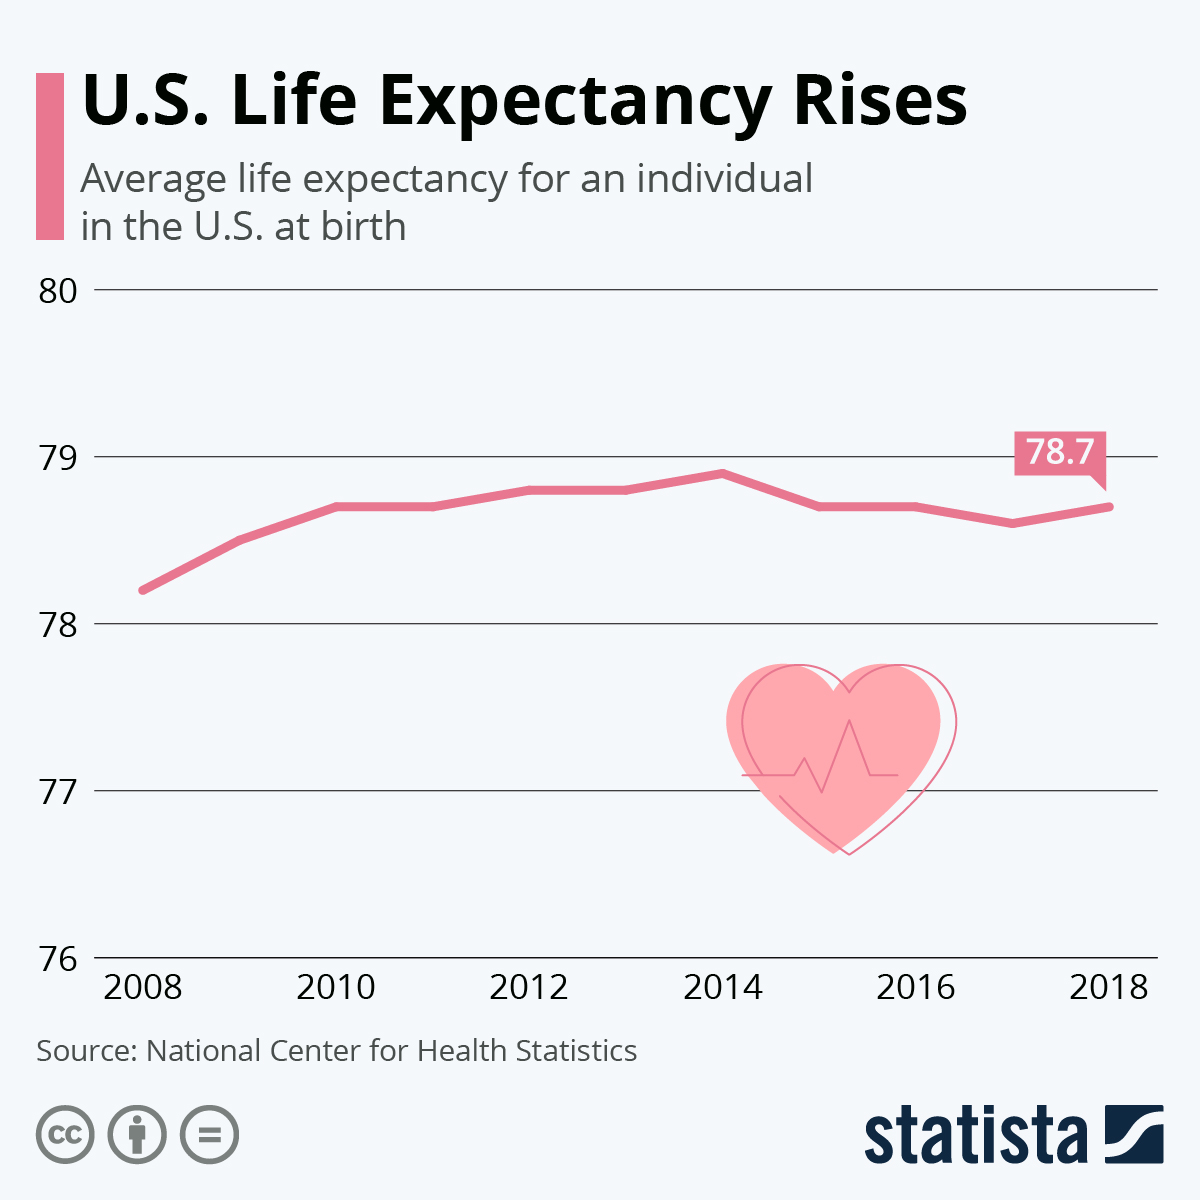 avg life expectancy in us